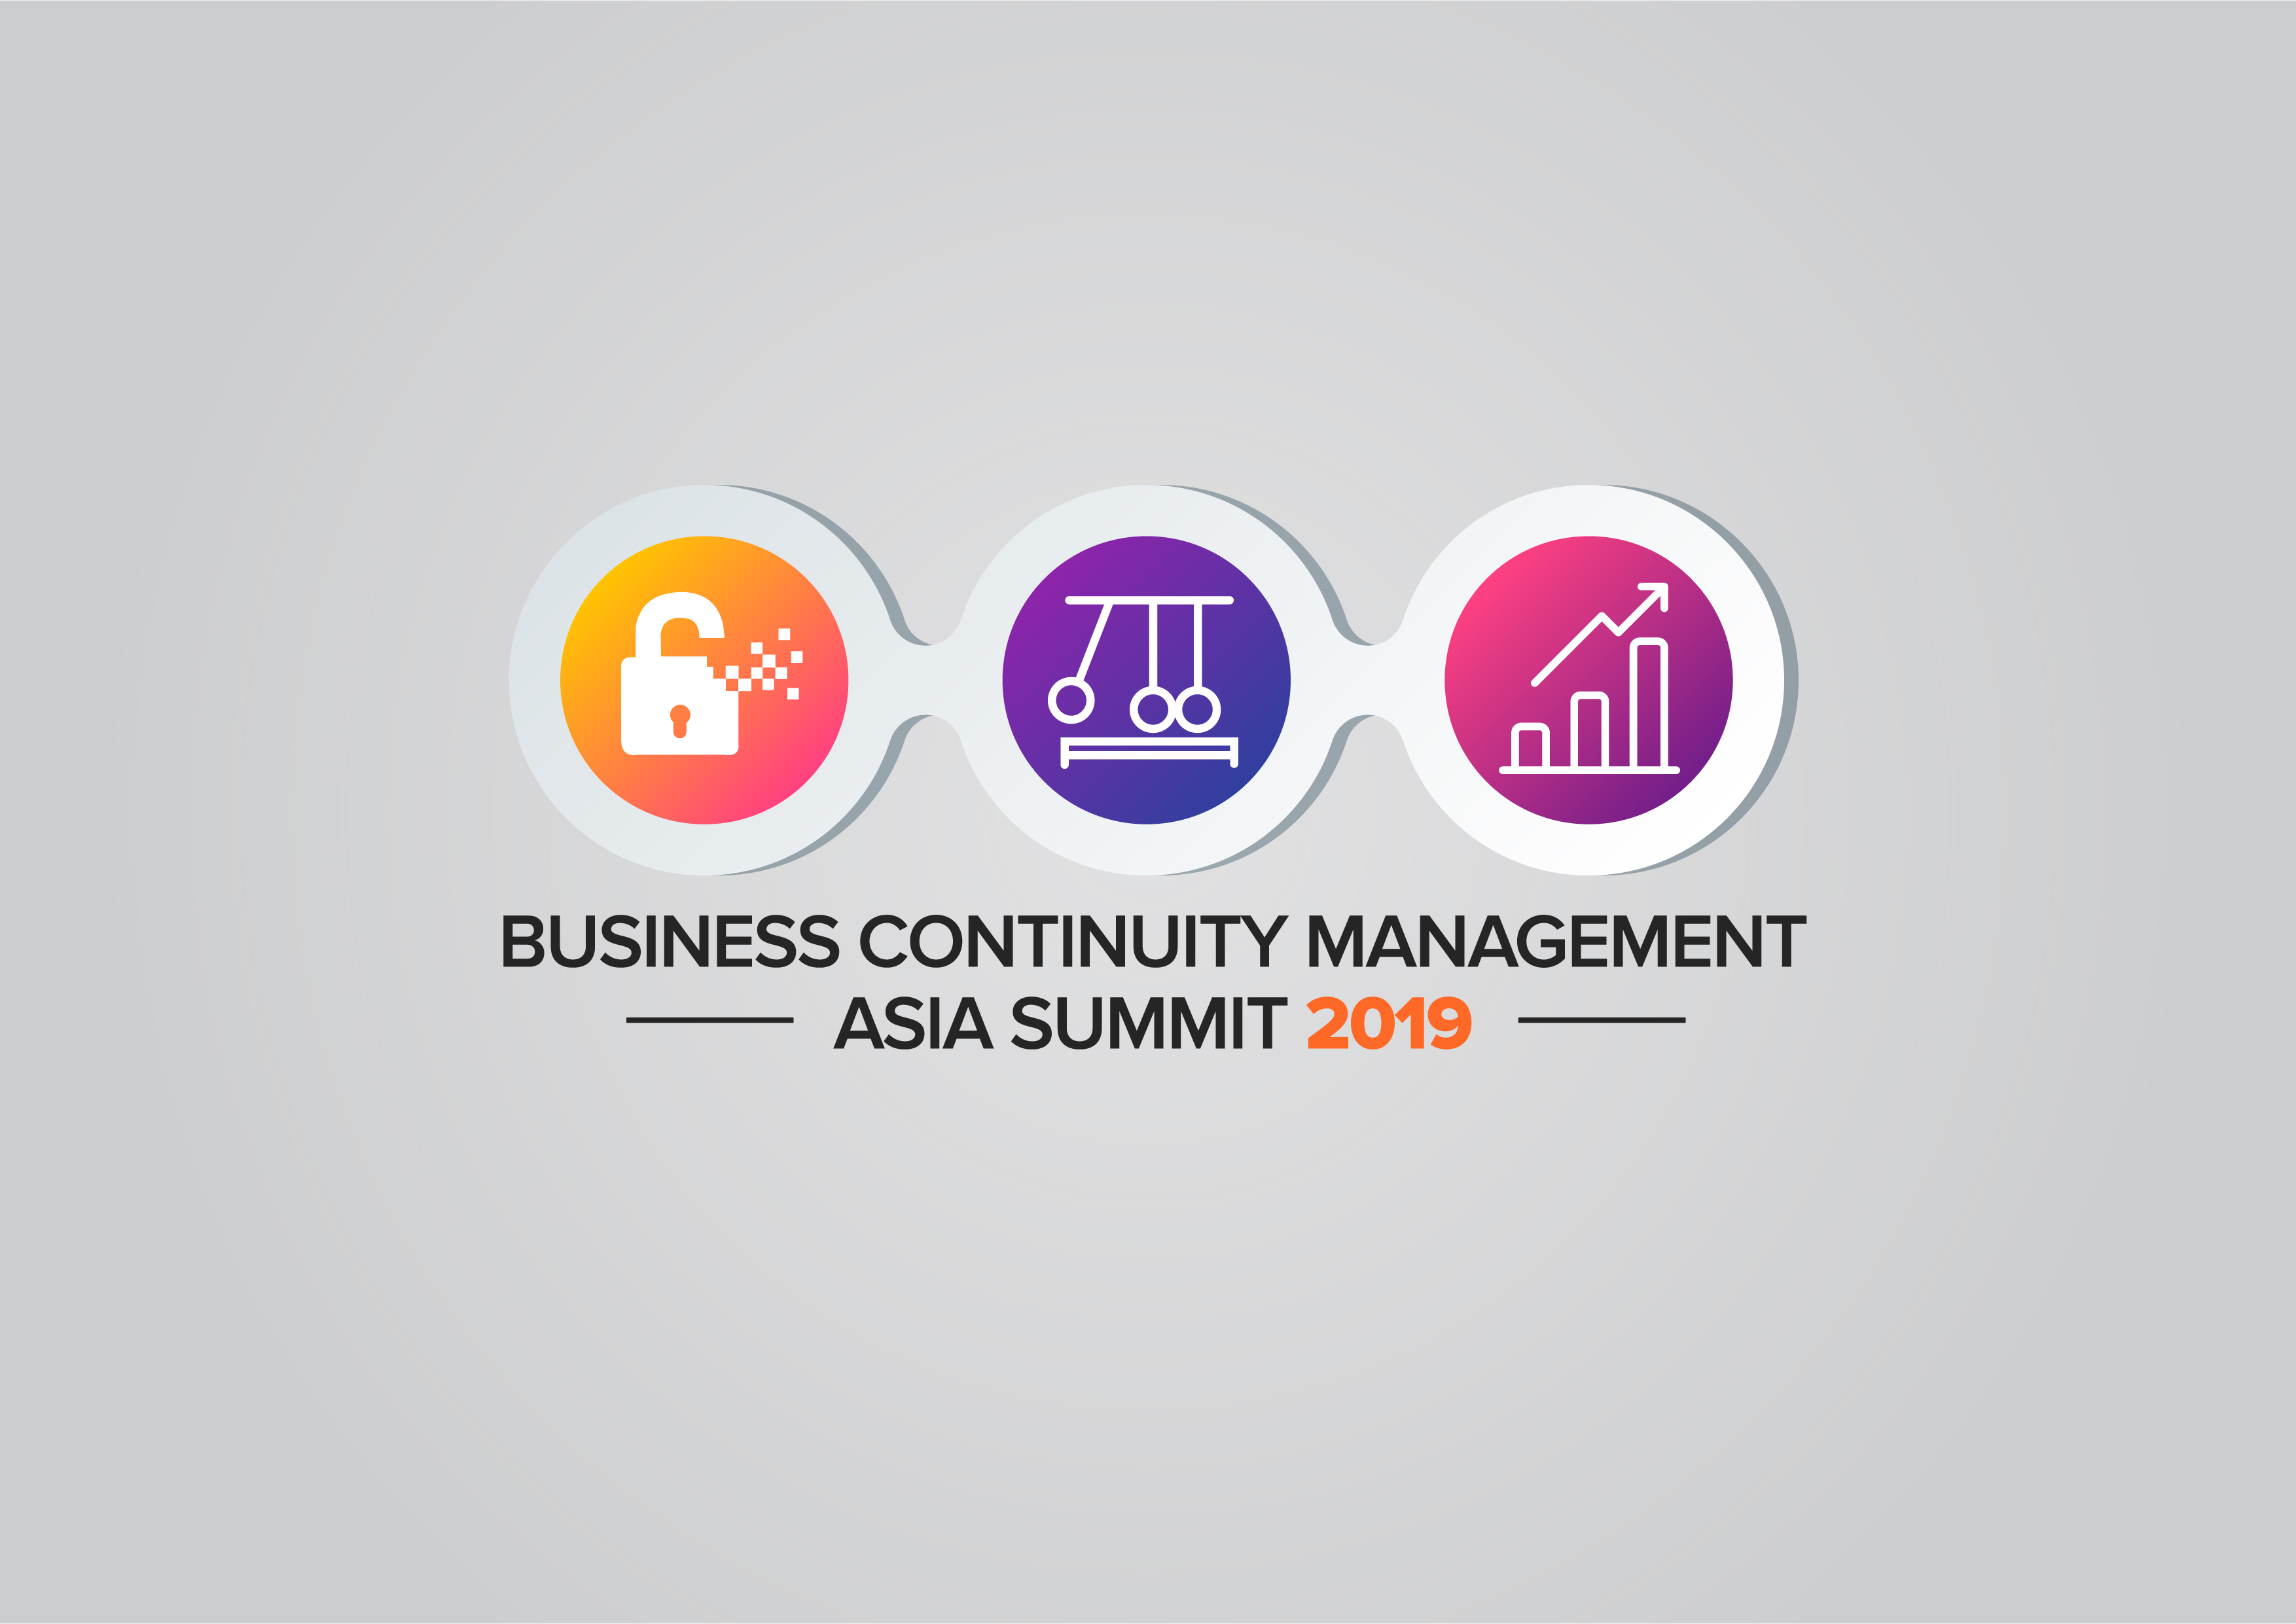 BUSINESS CONTINUITY MANAGEMENT ASIA SUMMIT 2019, Singapore, Central, Singapore